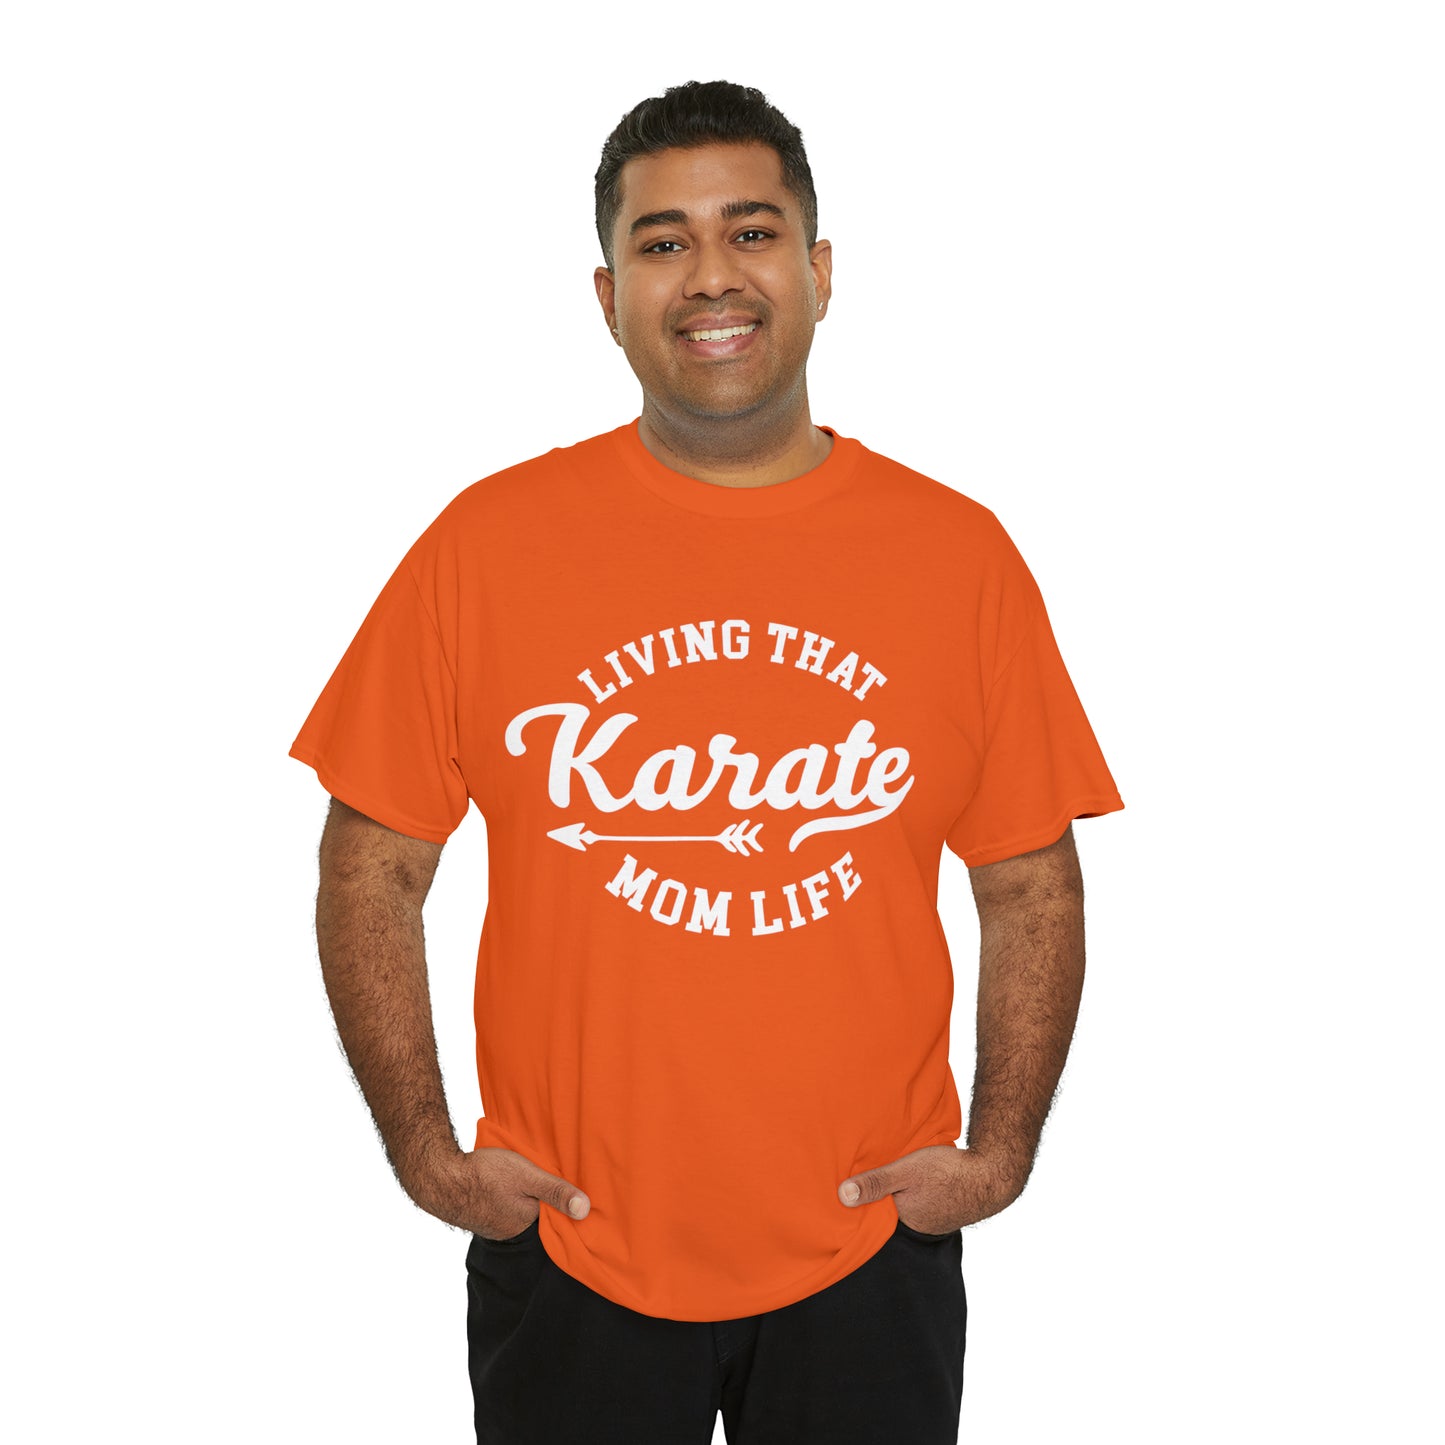 Karate Mom Life! Shirt For Mom, Heavy Cotton Tee